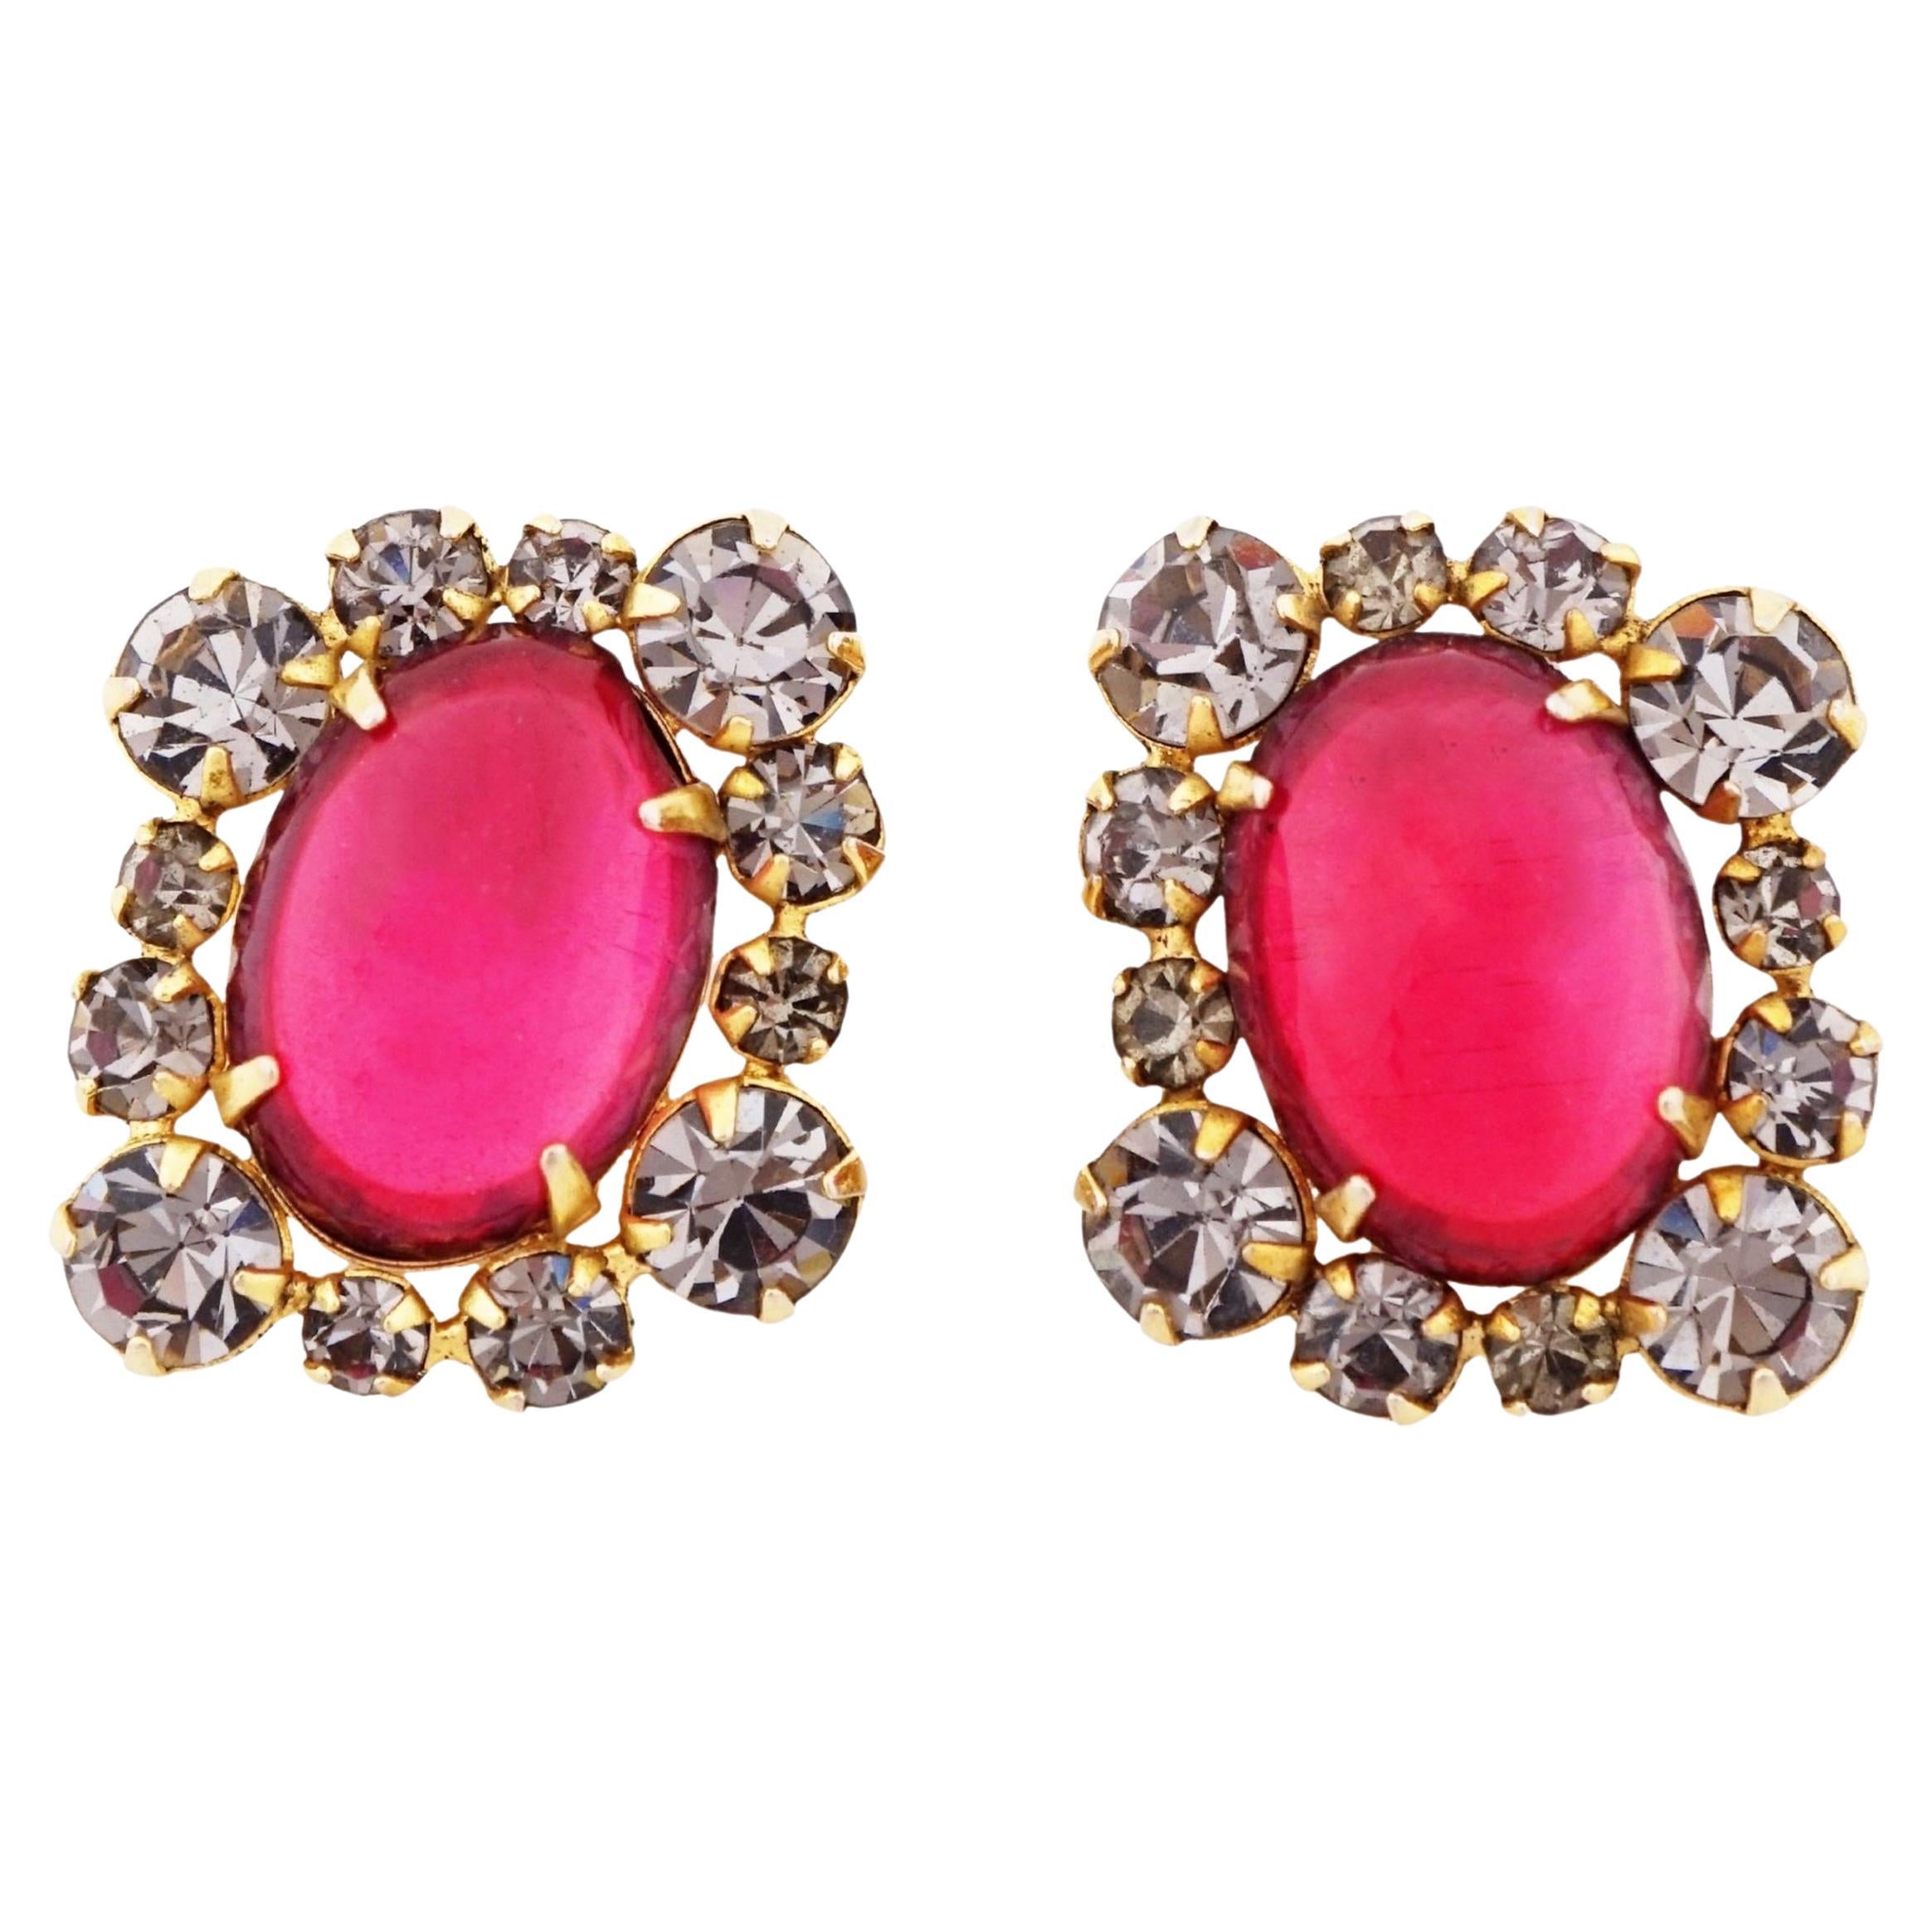 Red Gripoix Glass Earrings With Smokey Gray Rhinestones By Hattie Carnegie For Sale